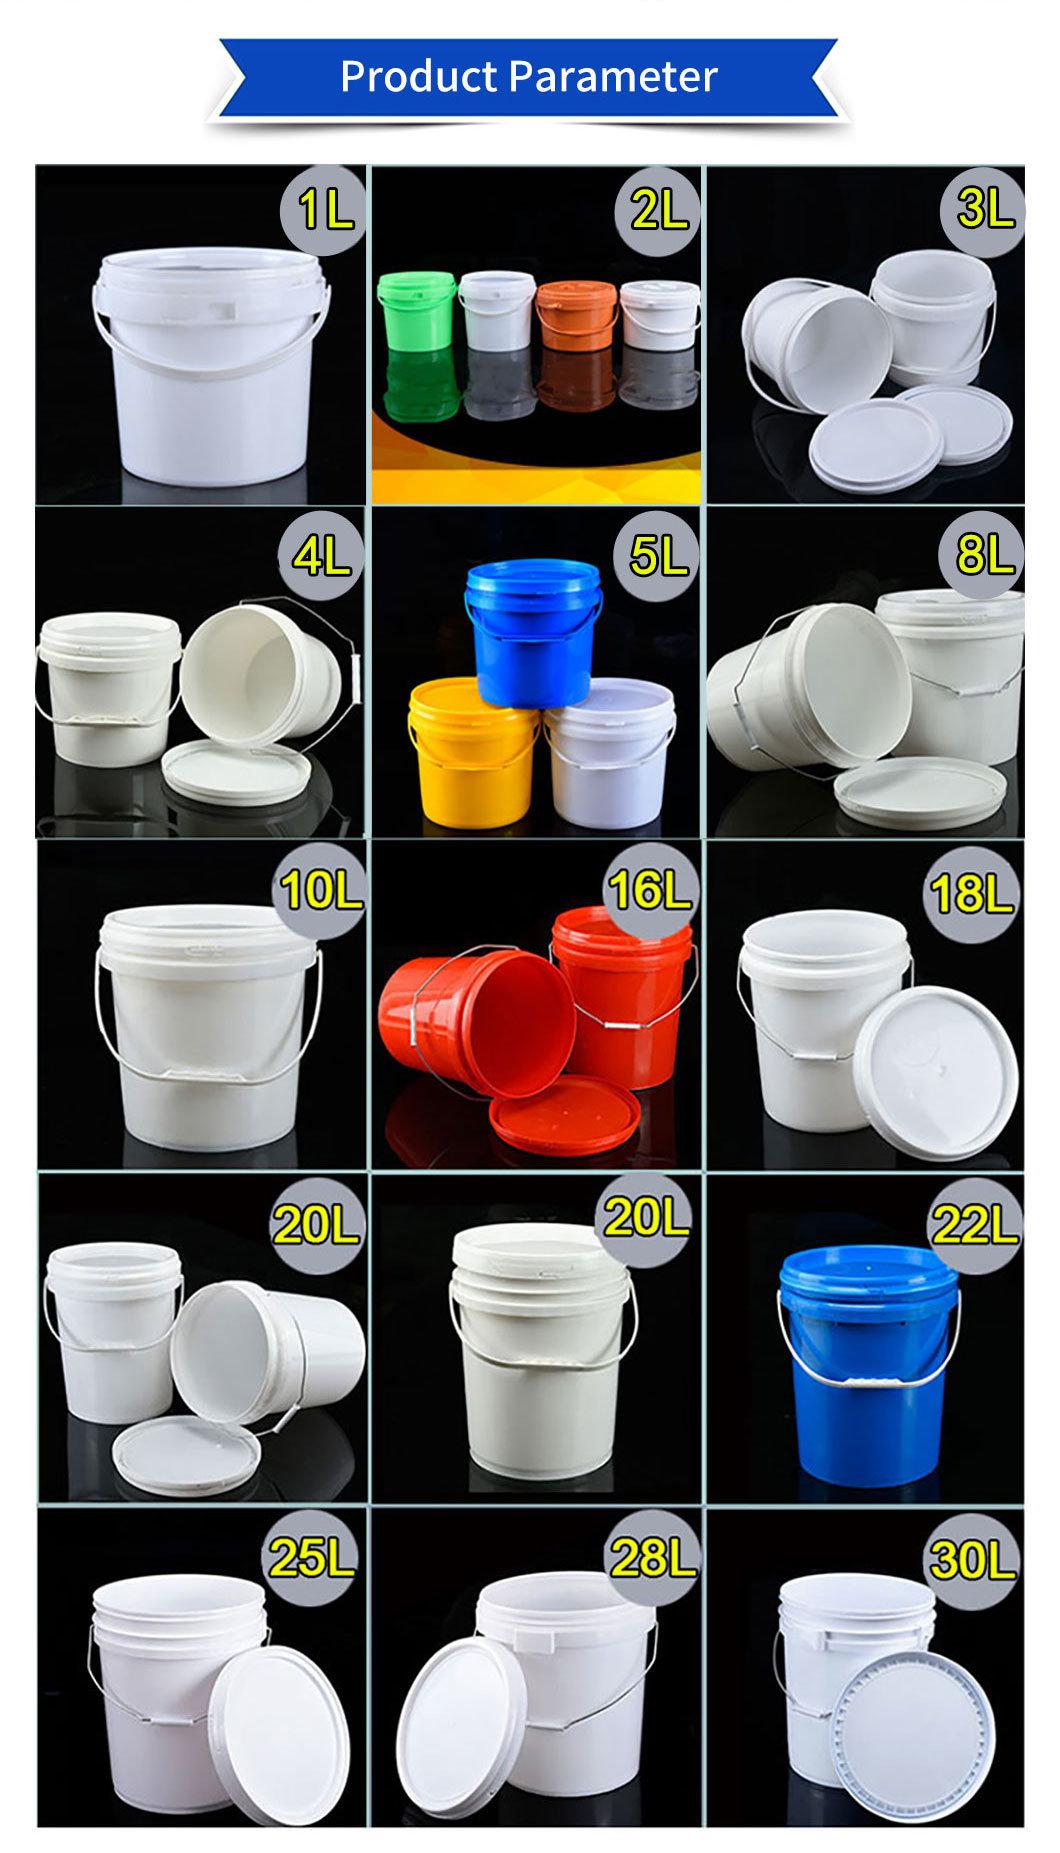 1L 2L 3L 5L 10L Round and Square Plastic Pails and Buckets